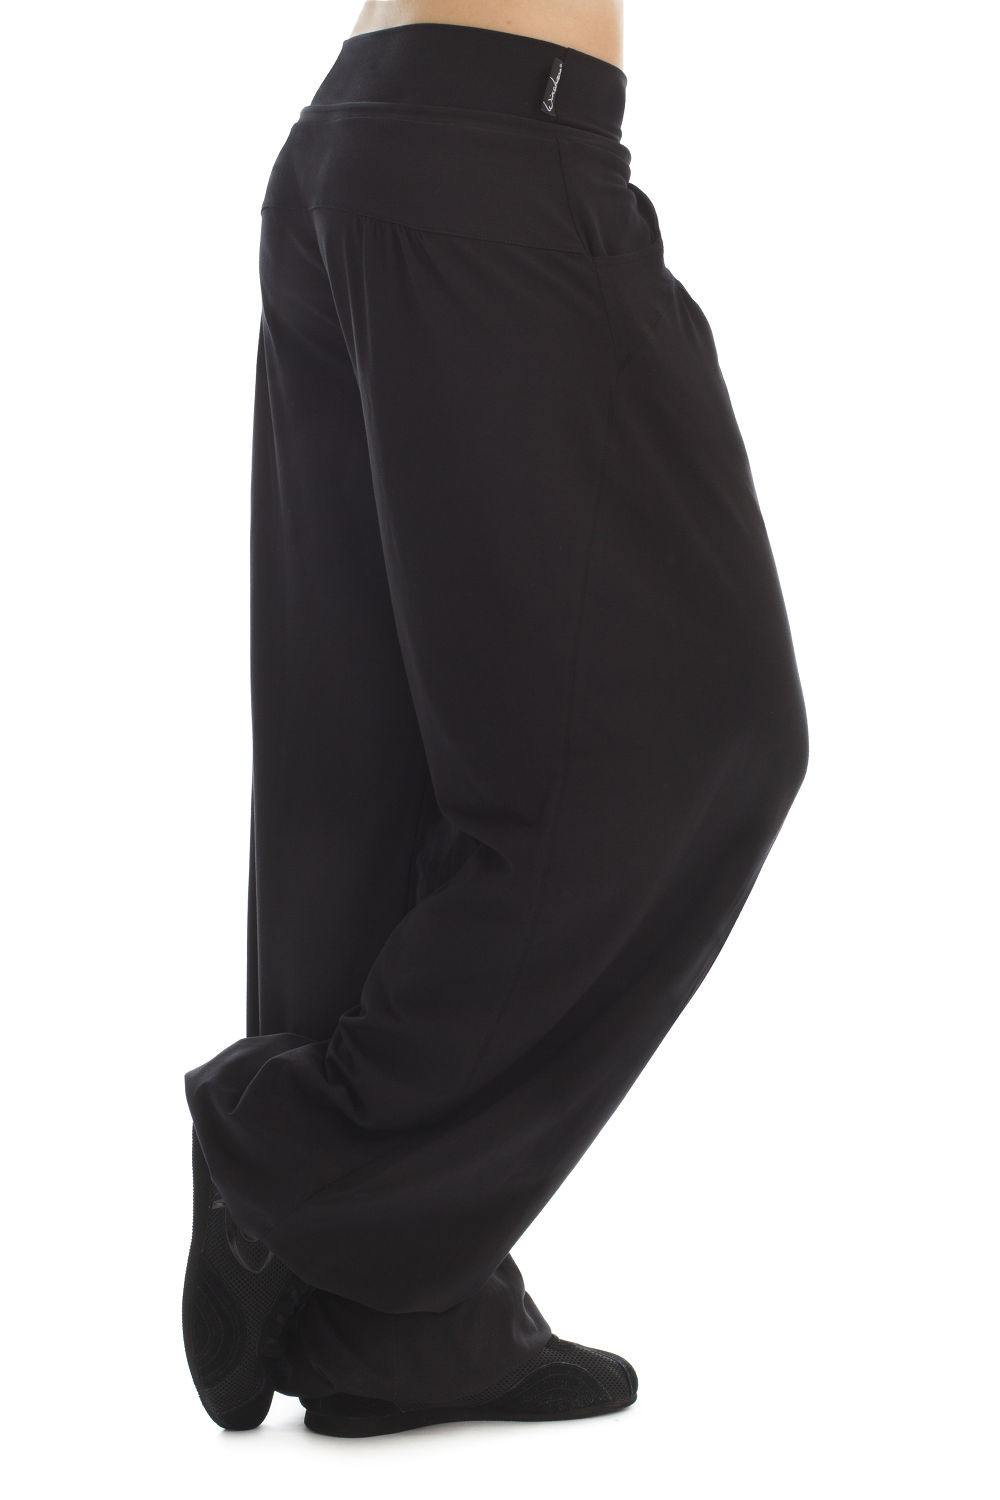 Baggy Dance WTE3 Style Black, - Winshape Trousers